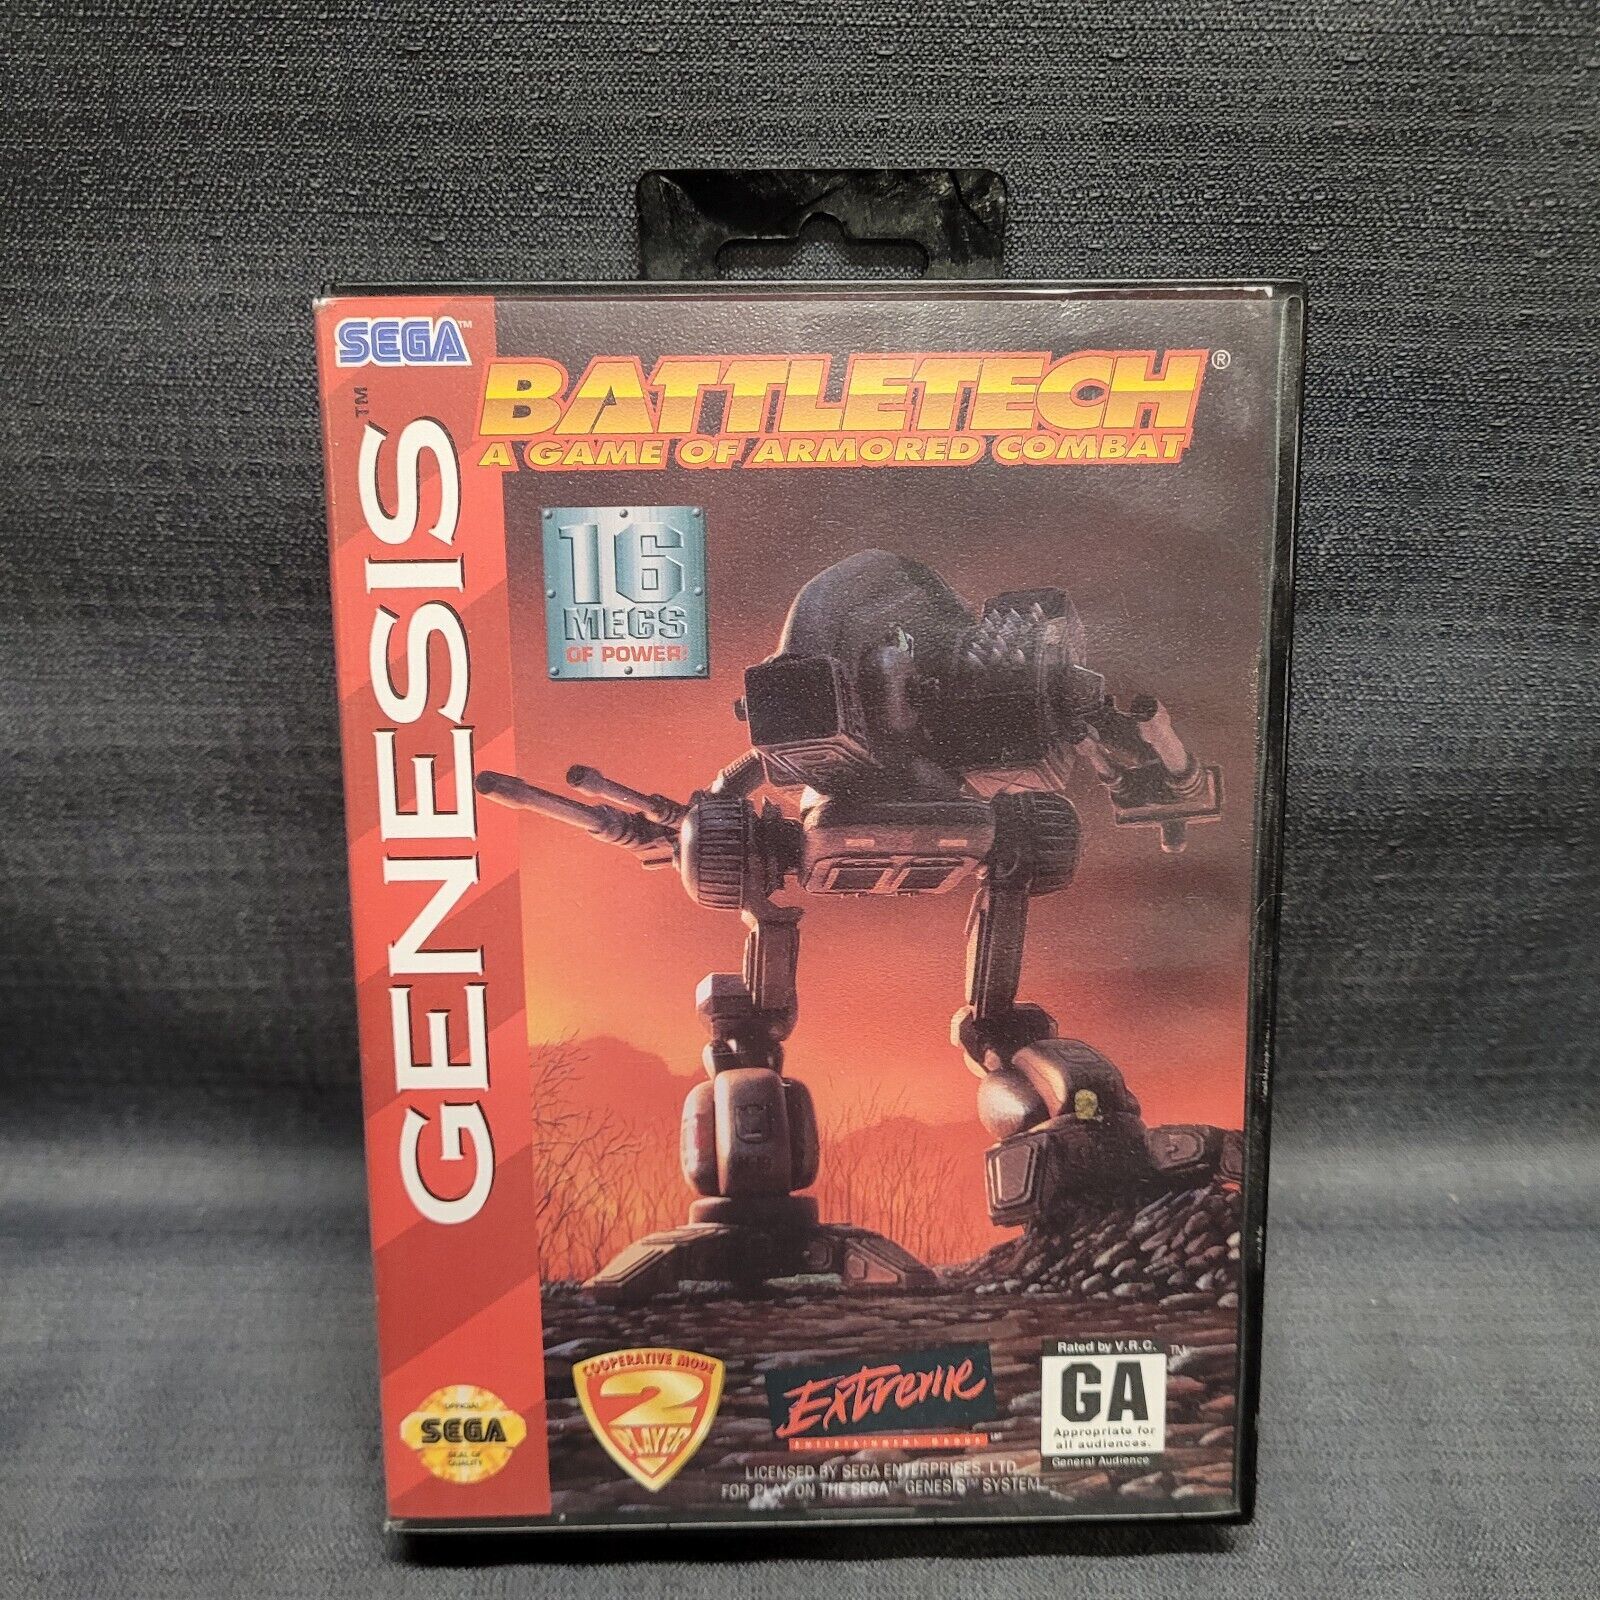 BattleTech: A Game of Armored Combat (Sega Genesis, 1994) Video Game - $46.53